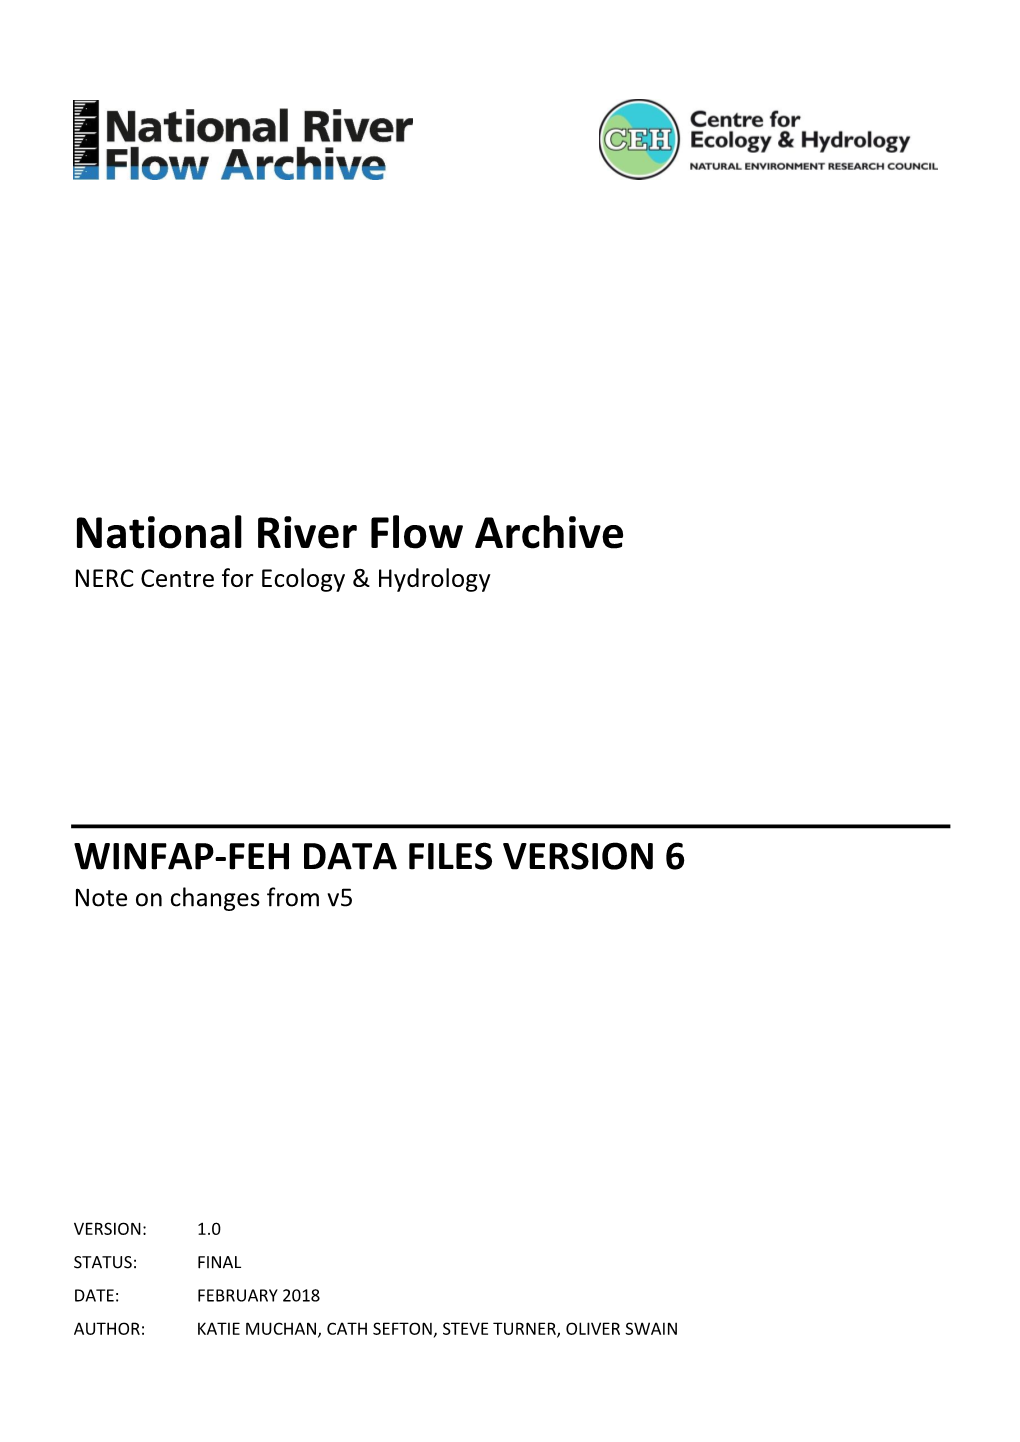 NRFA Peak Flow Dataset